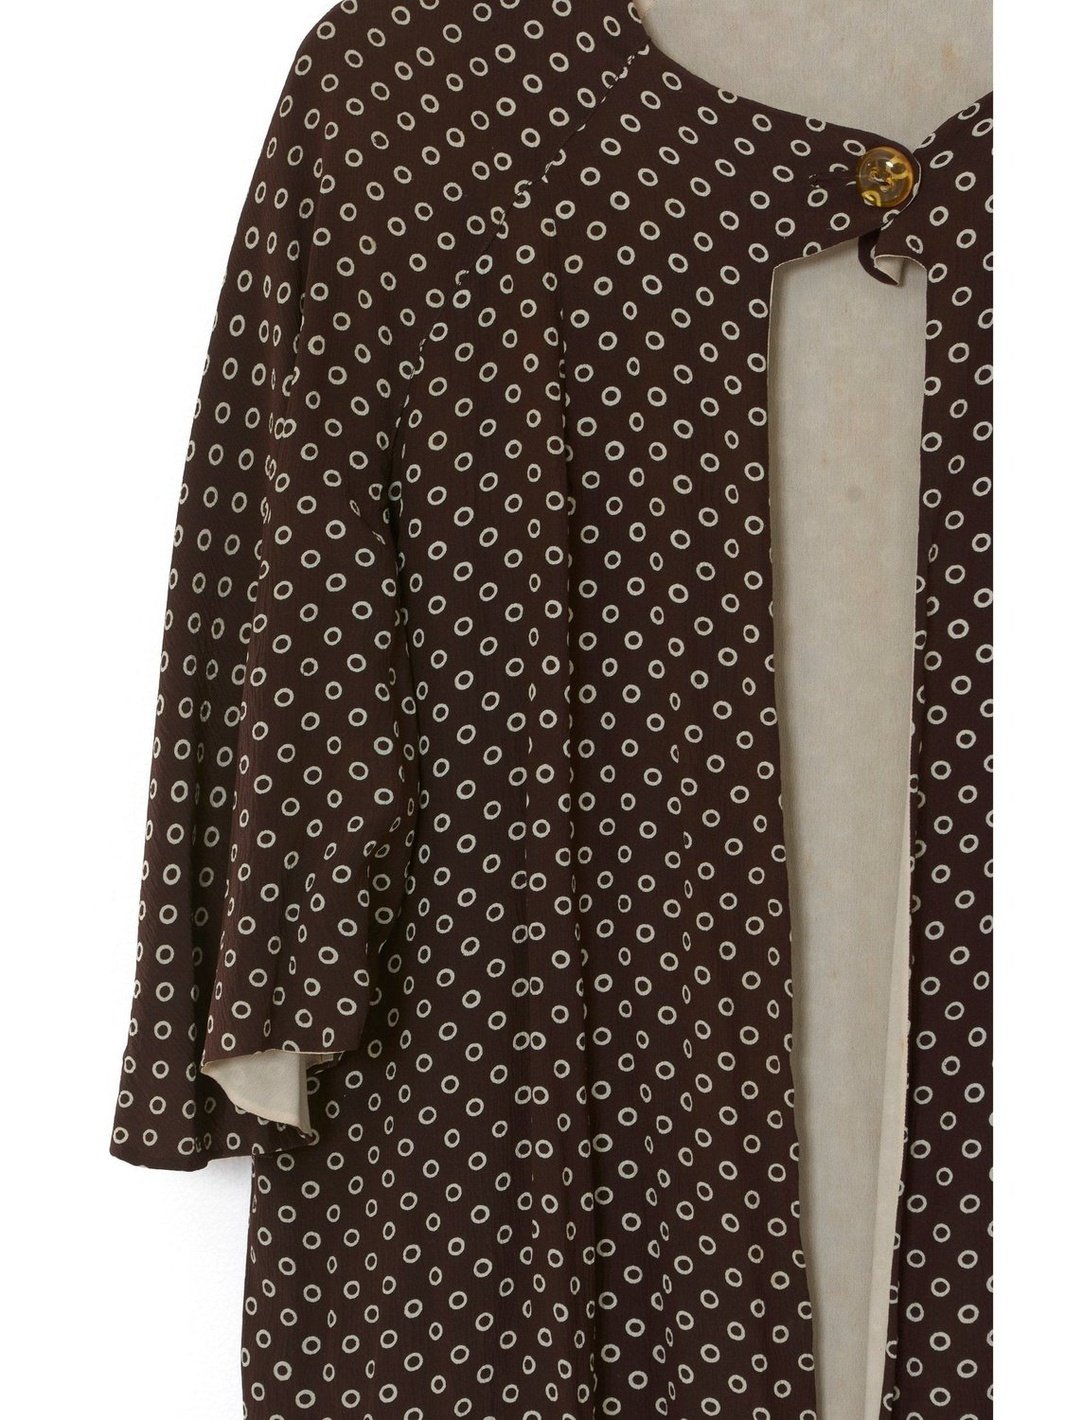 Vintage polka dot dress and cape ensemble